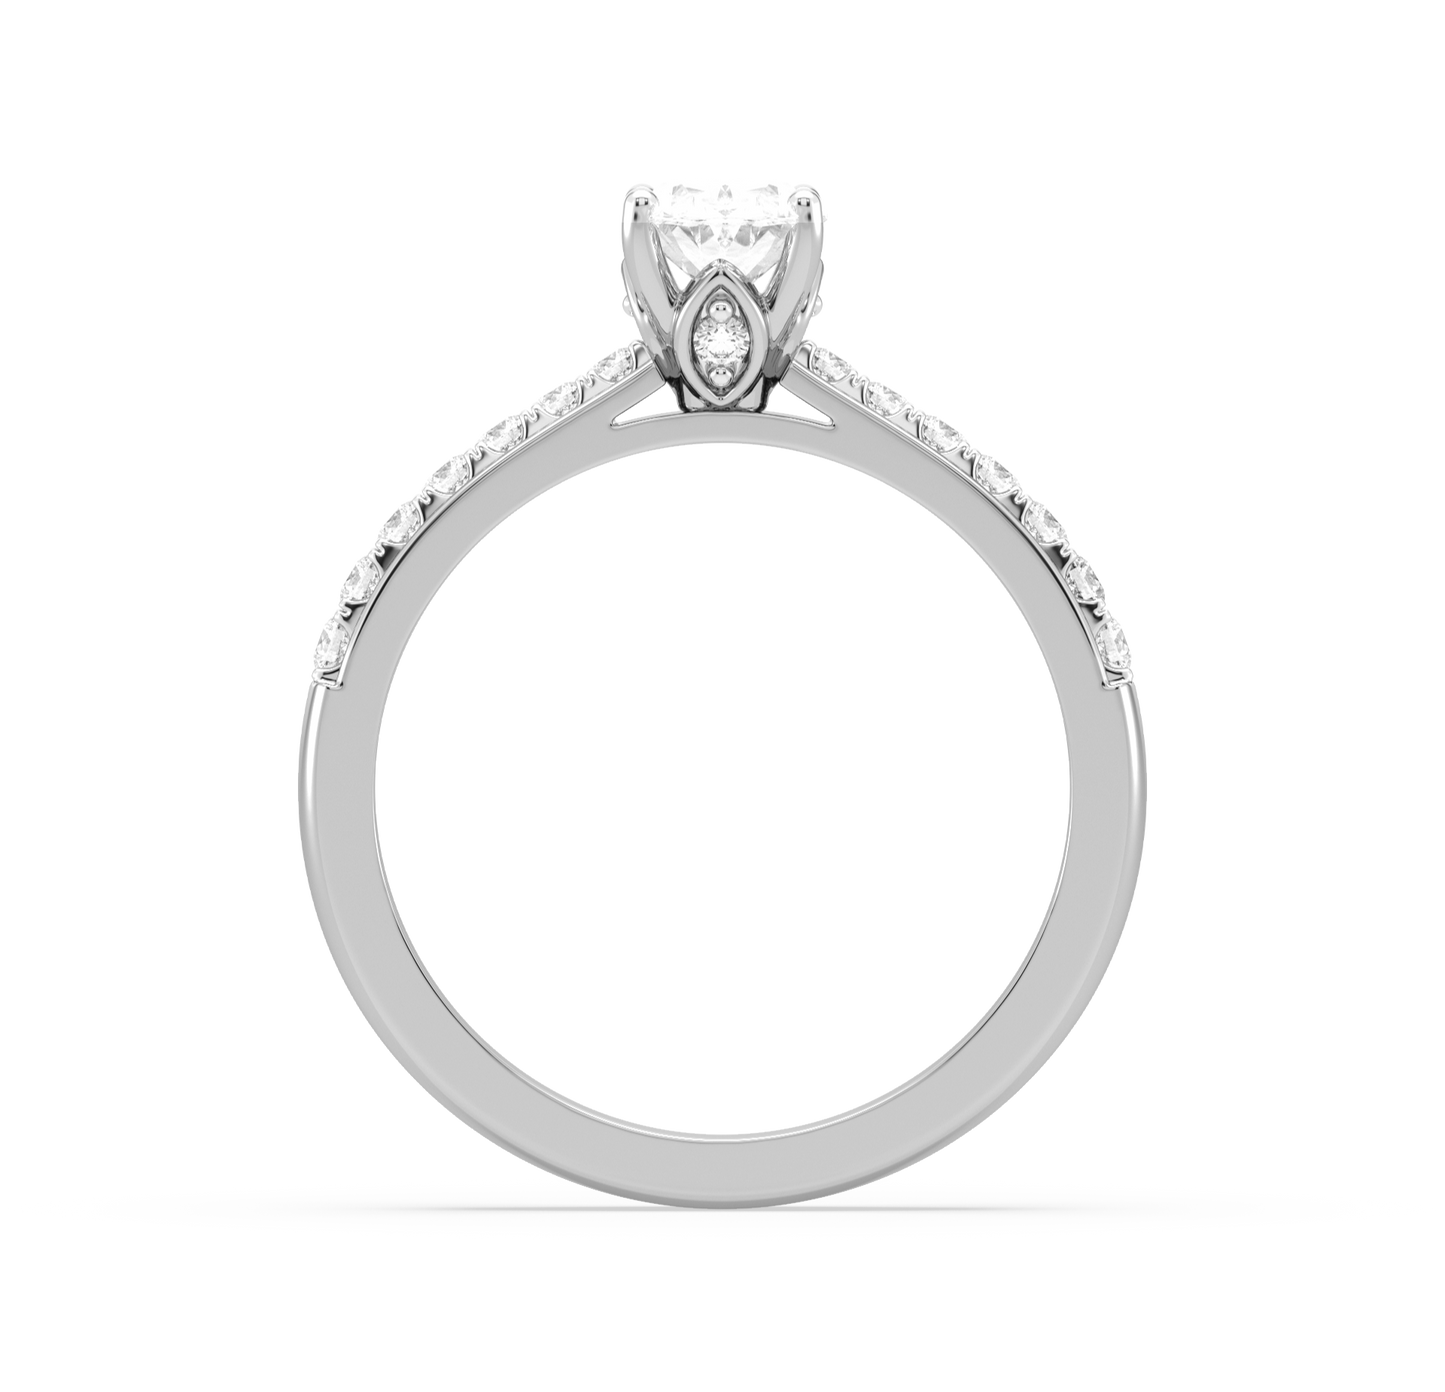 Customised ring RG21008-PH21028